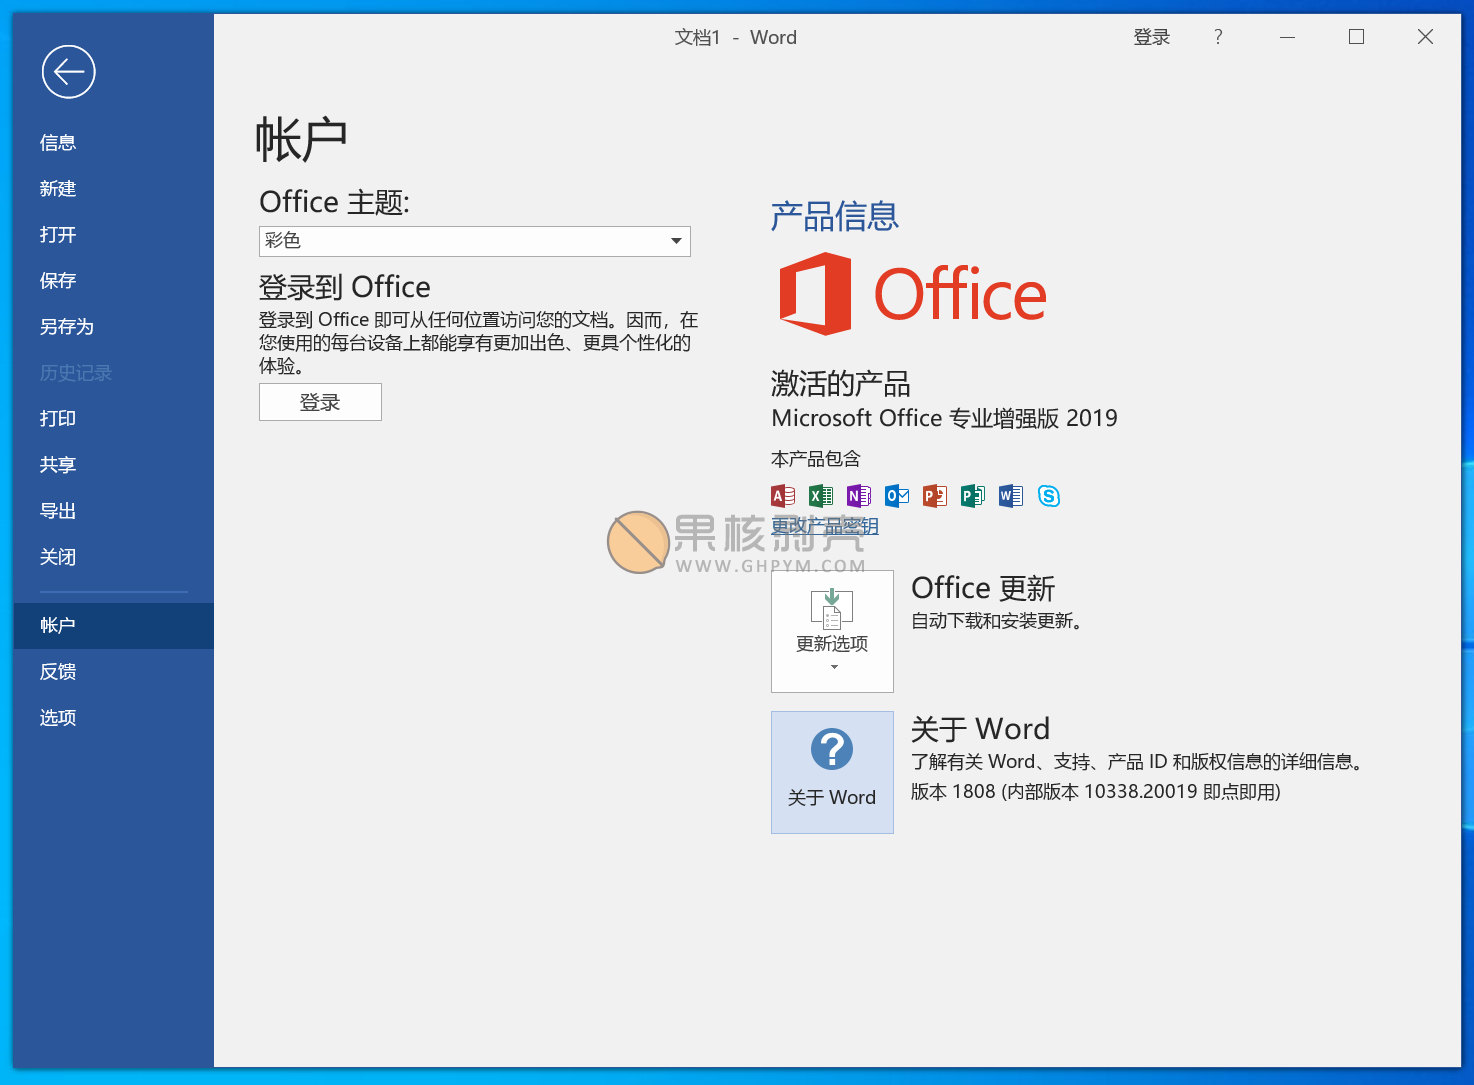 Microsoft Office 2019 2022年12月批量许可版